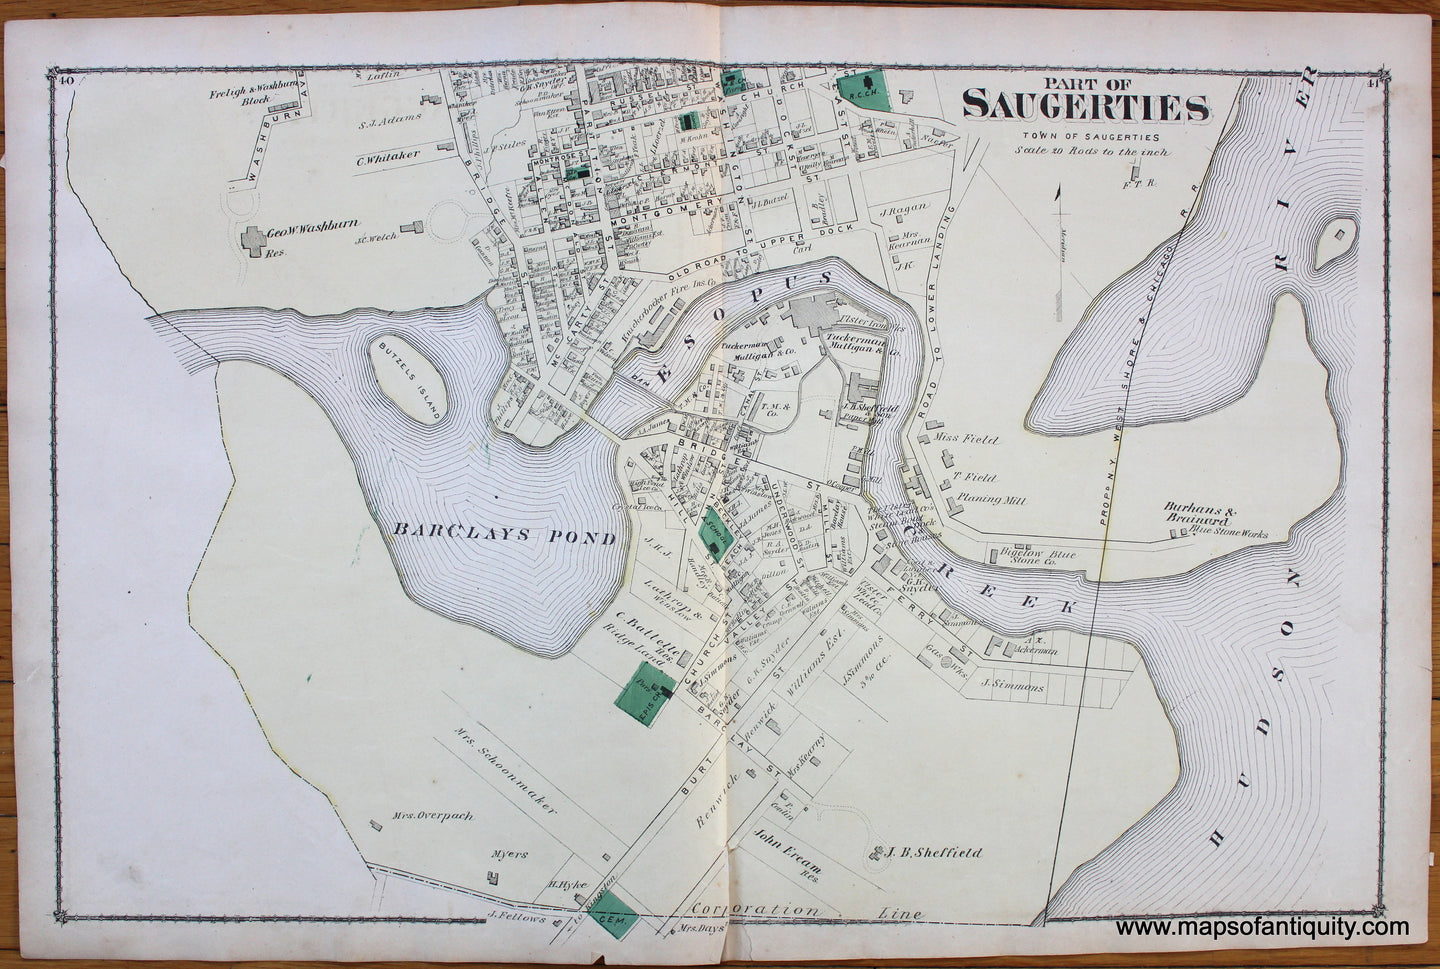 Part-of-Saugerties-Quarryville-Malden-West-Saugerties-P.O-West-Camp-Landing-Glenerie-Unionville-Bethel-Ulster-County-New-York-1875-Beers-1870s-1800s-19th-century-antique-Maps-of-Antiquity